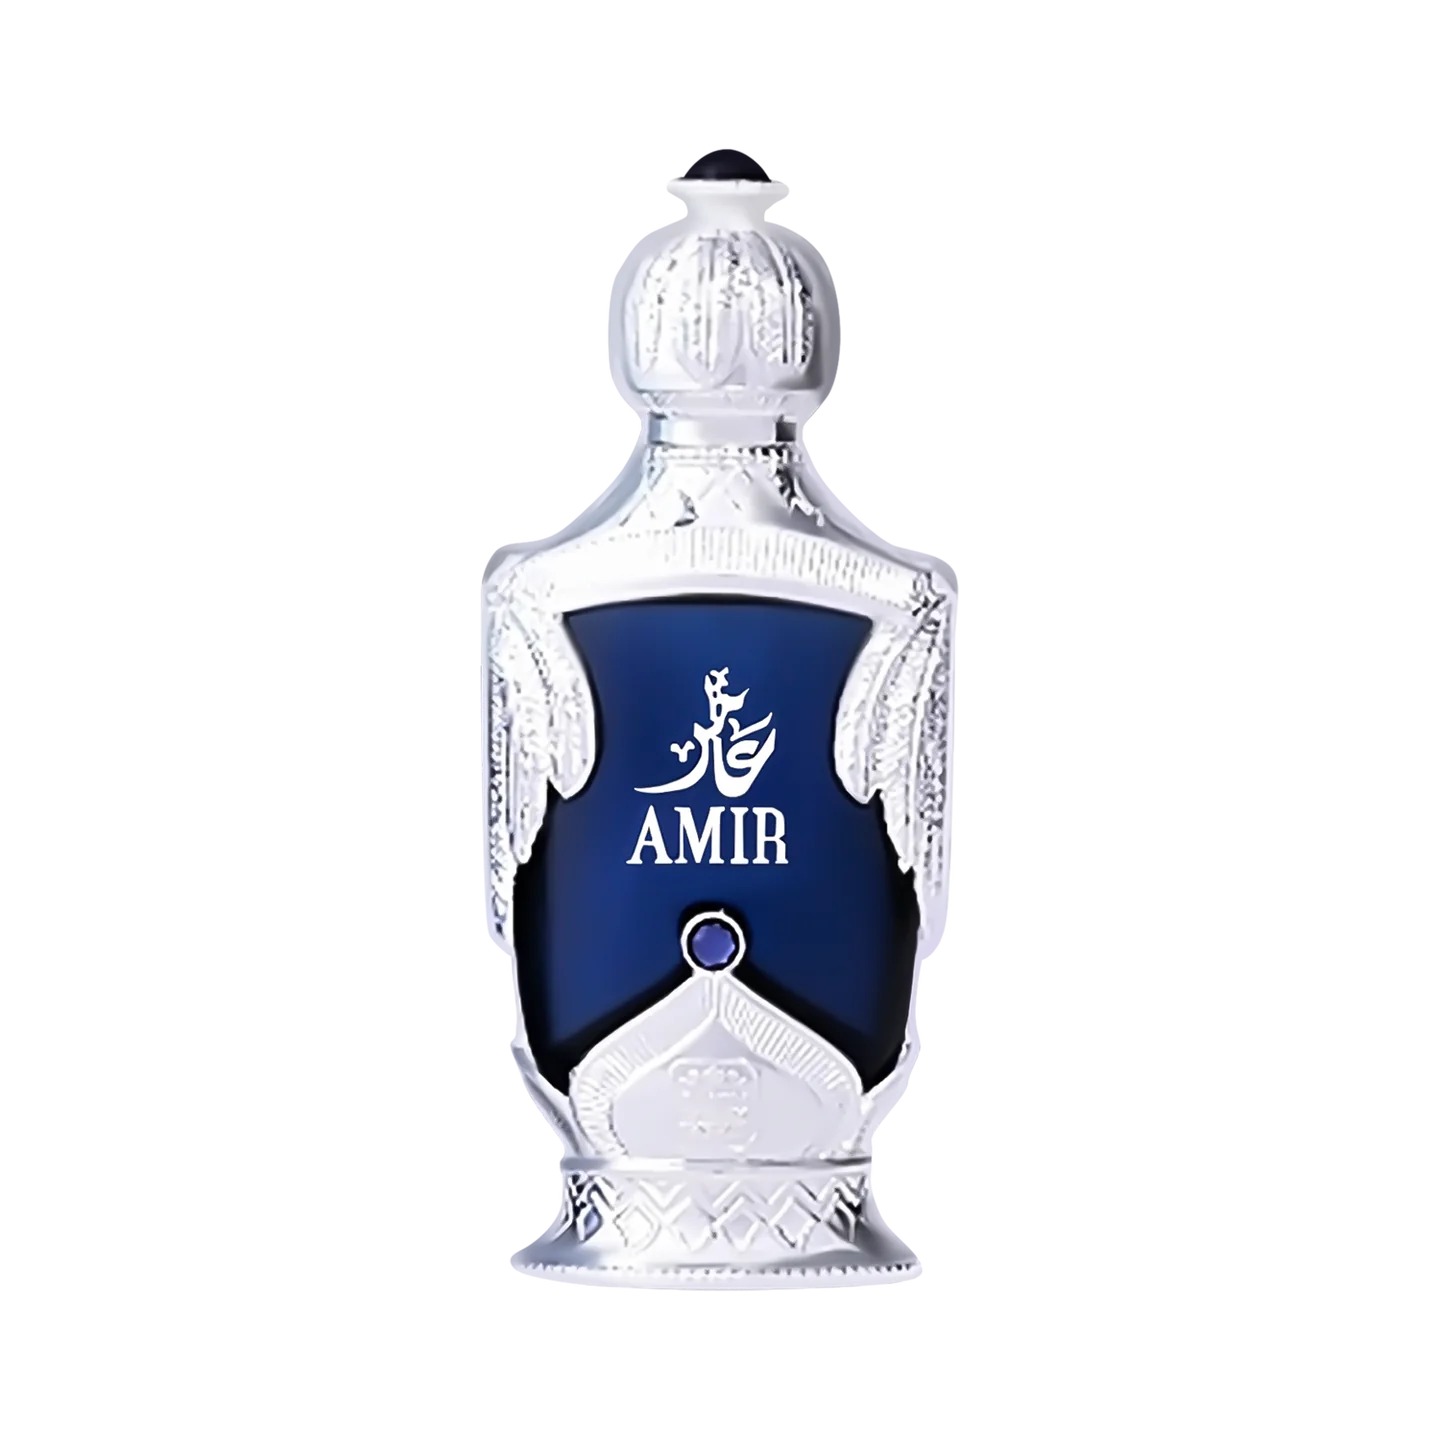 Naseem AMIR Attar Premium Perfume Oil - For Men - 20ML